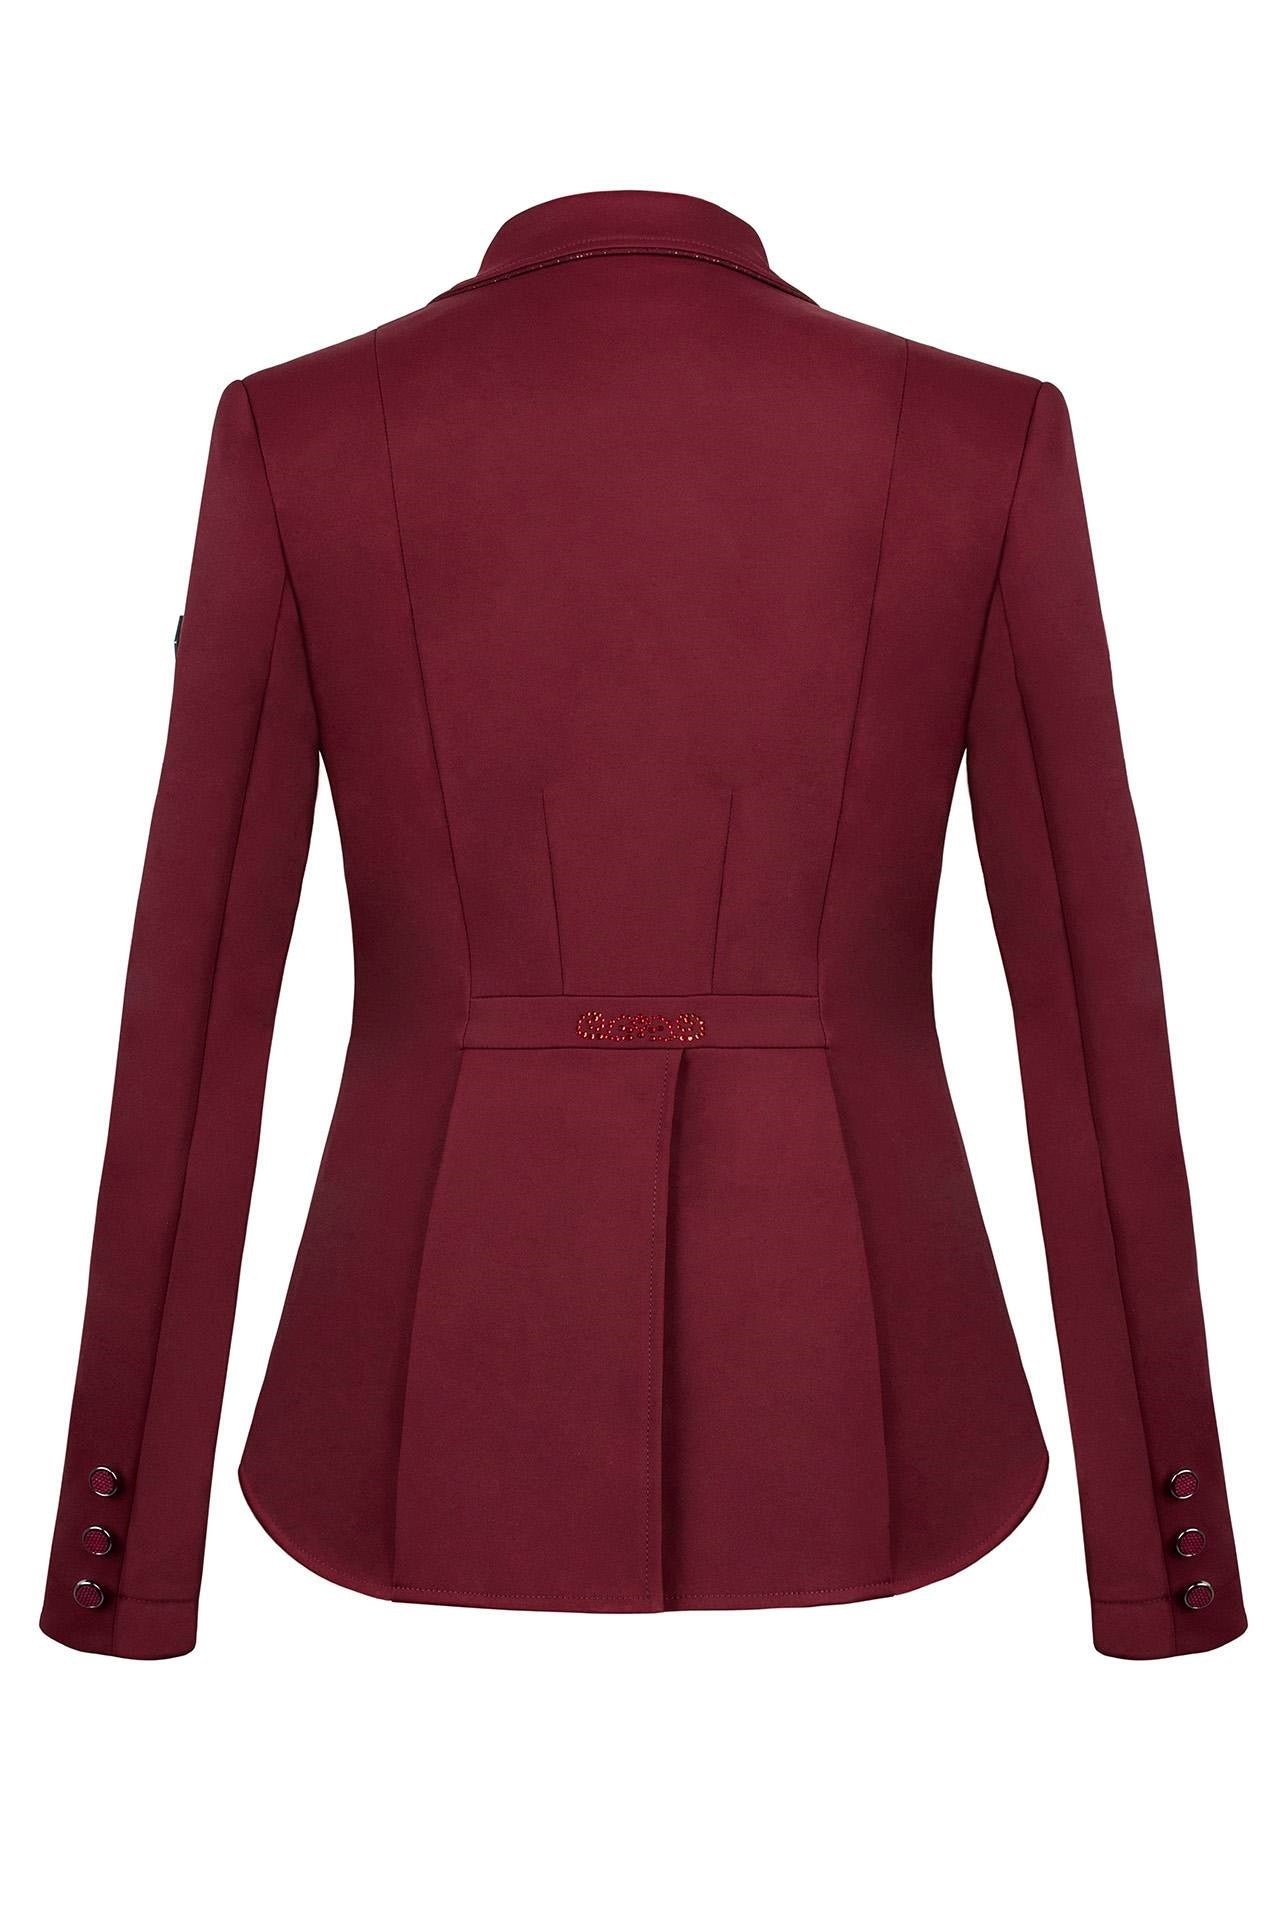 Dressage Short Tailcoat Lexim Chic burgundy